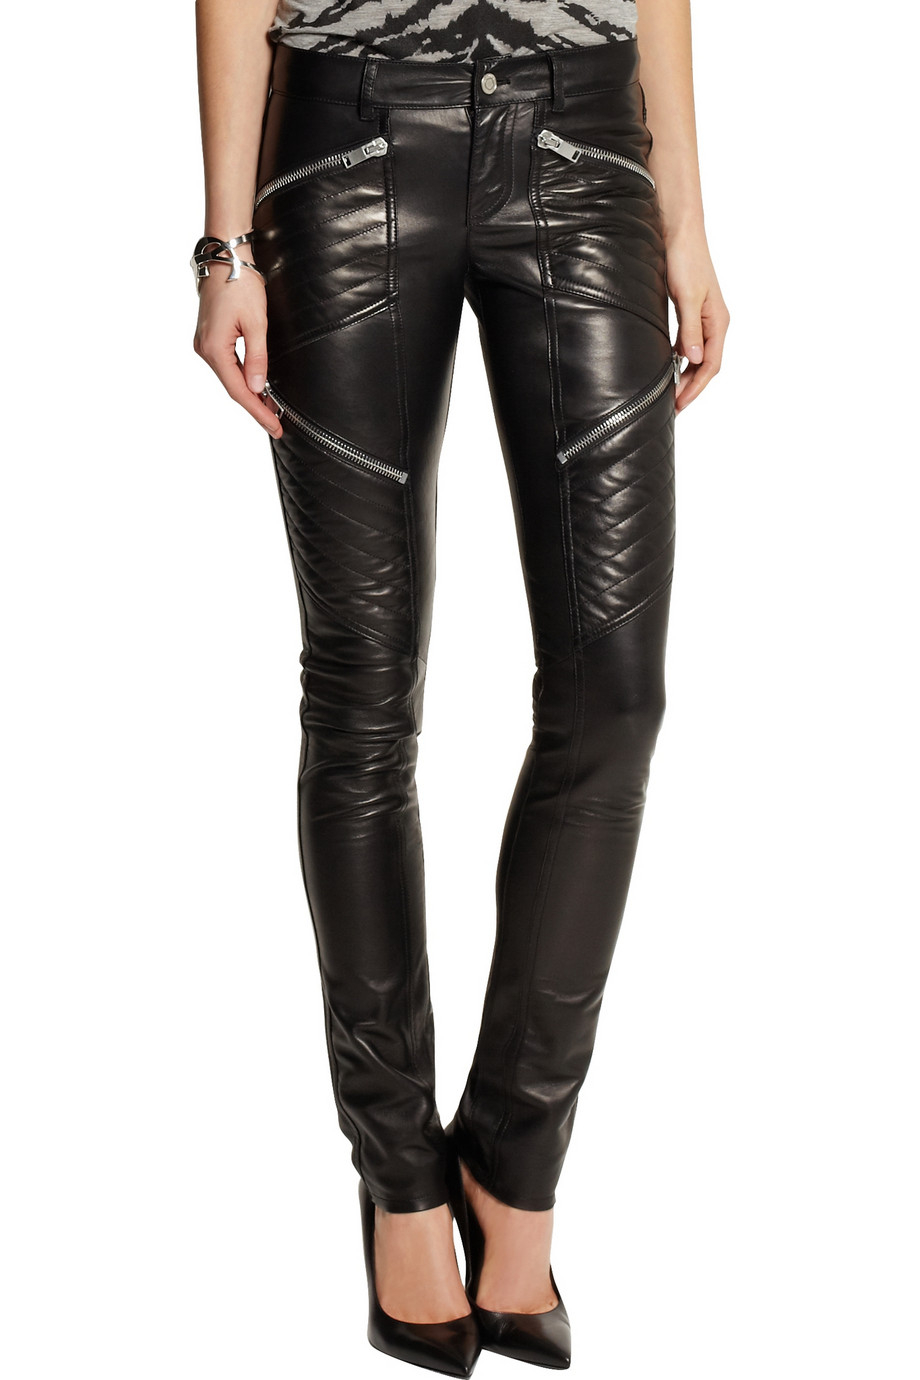 Saint Laurent Leather Skinny Pants in Black - Lyst